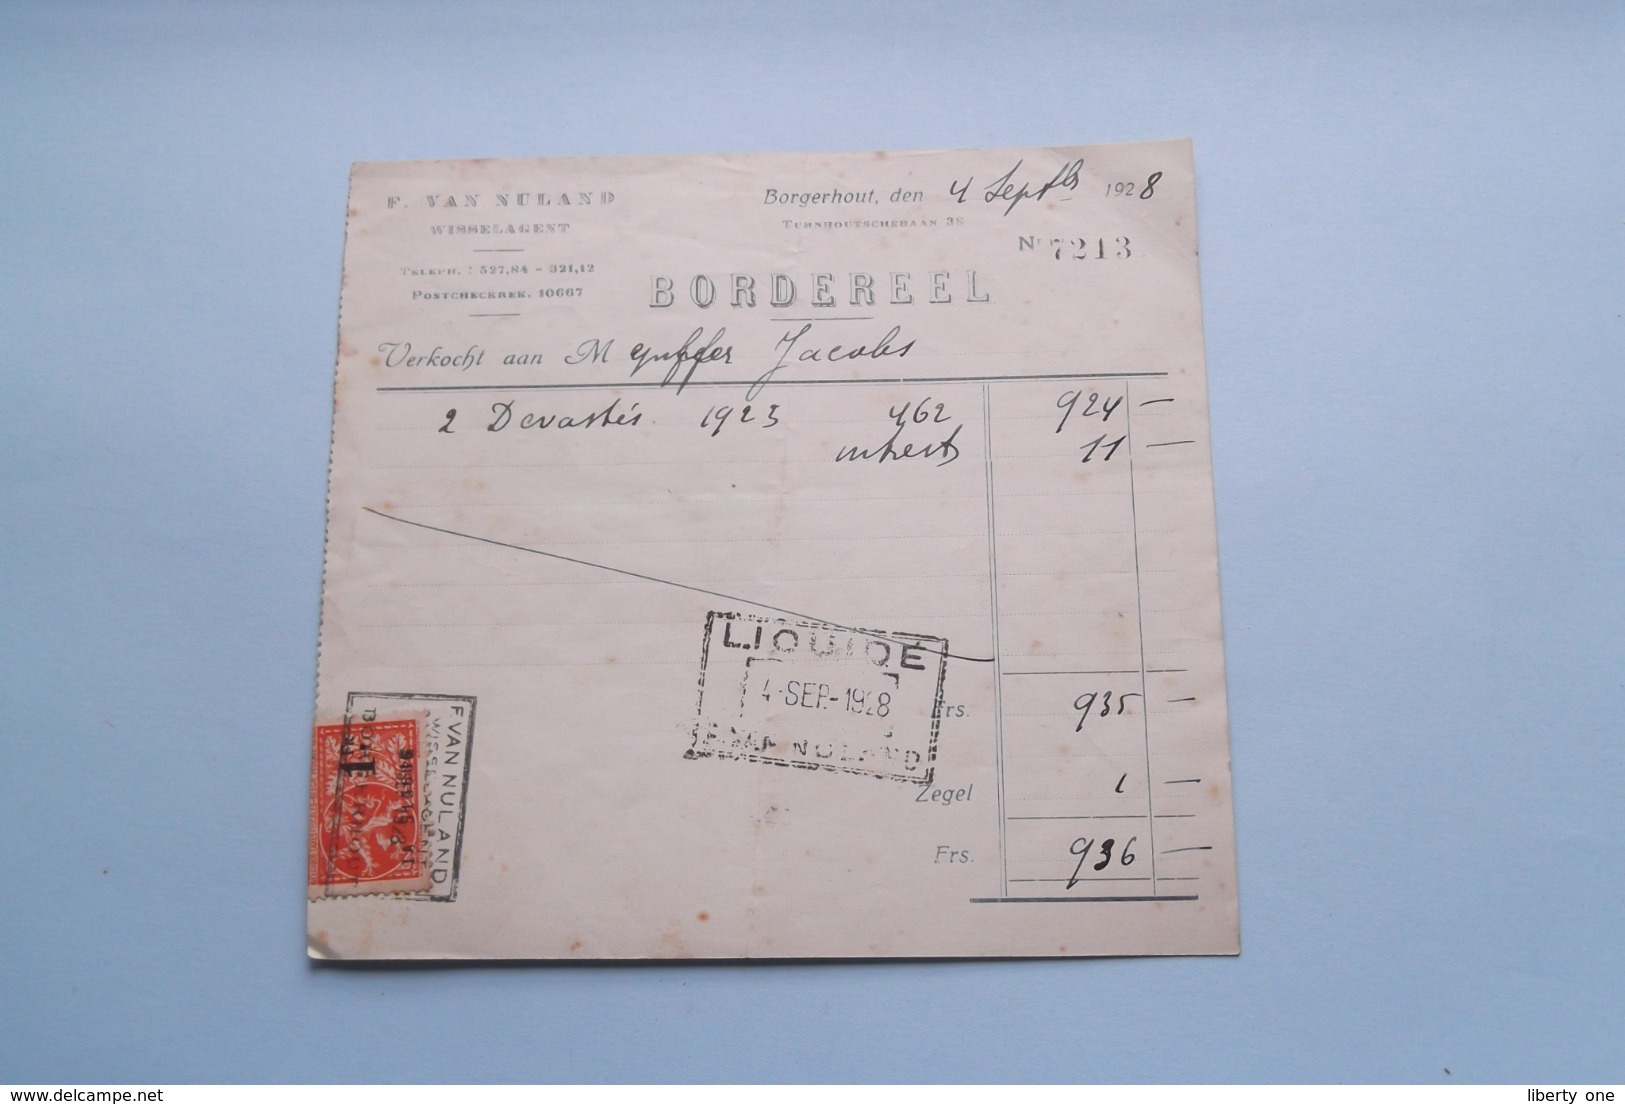 F. Van NULAND WISSELAGENT BORGERHOUT Antwerpen > BORDEREEL Anno 1928 ( Zie Foto's ) 1 Stuk ! - Bank & Versicherung